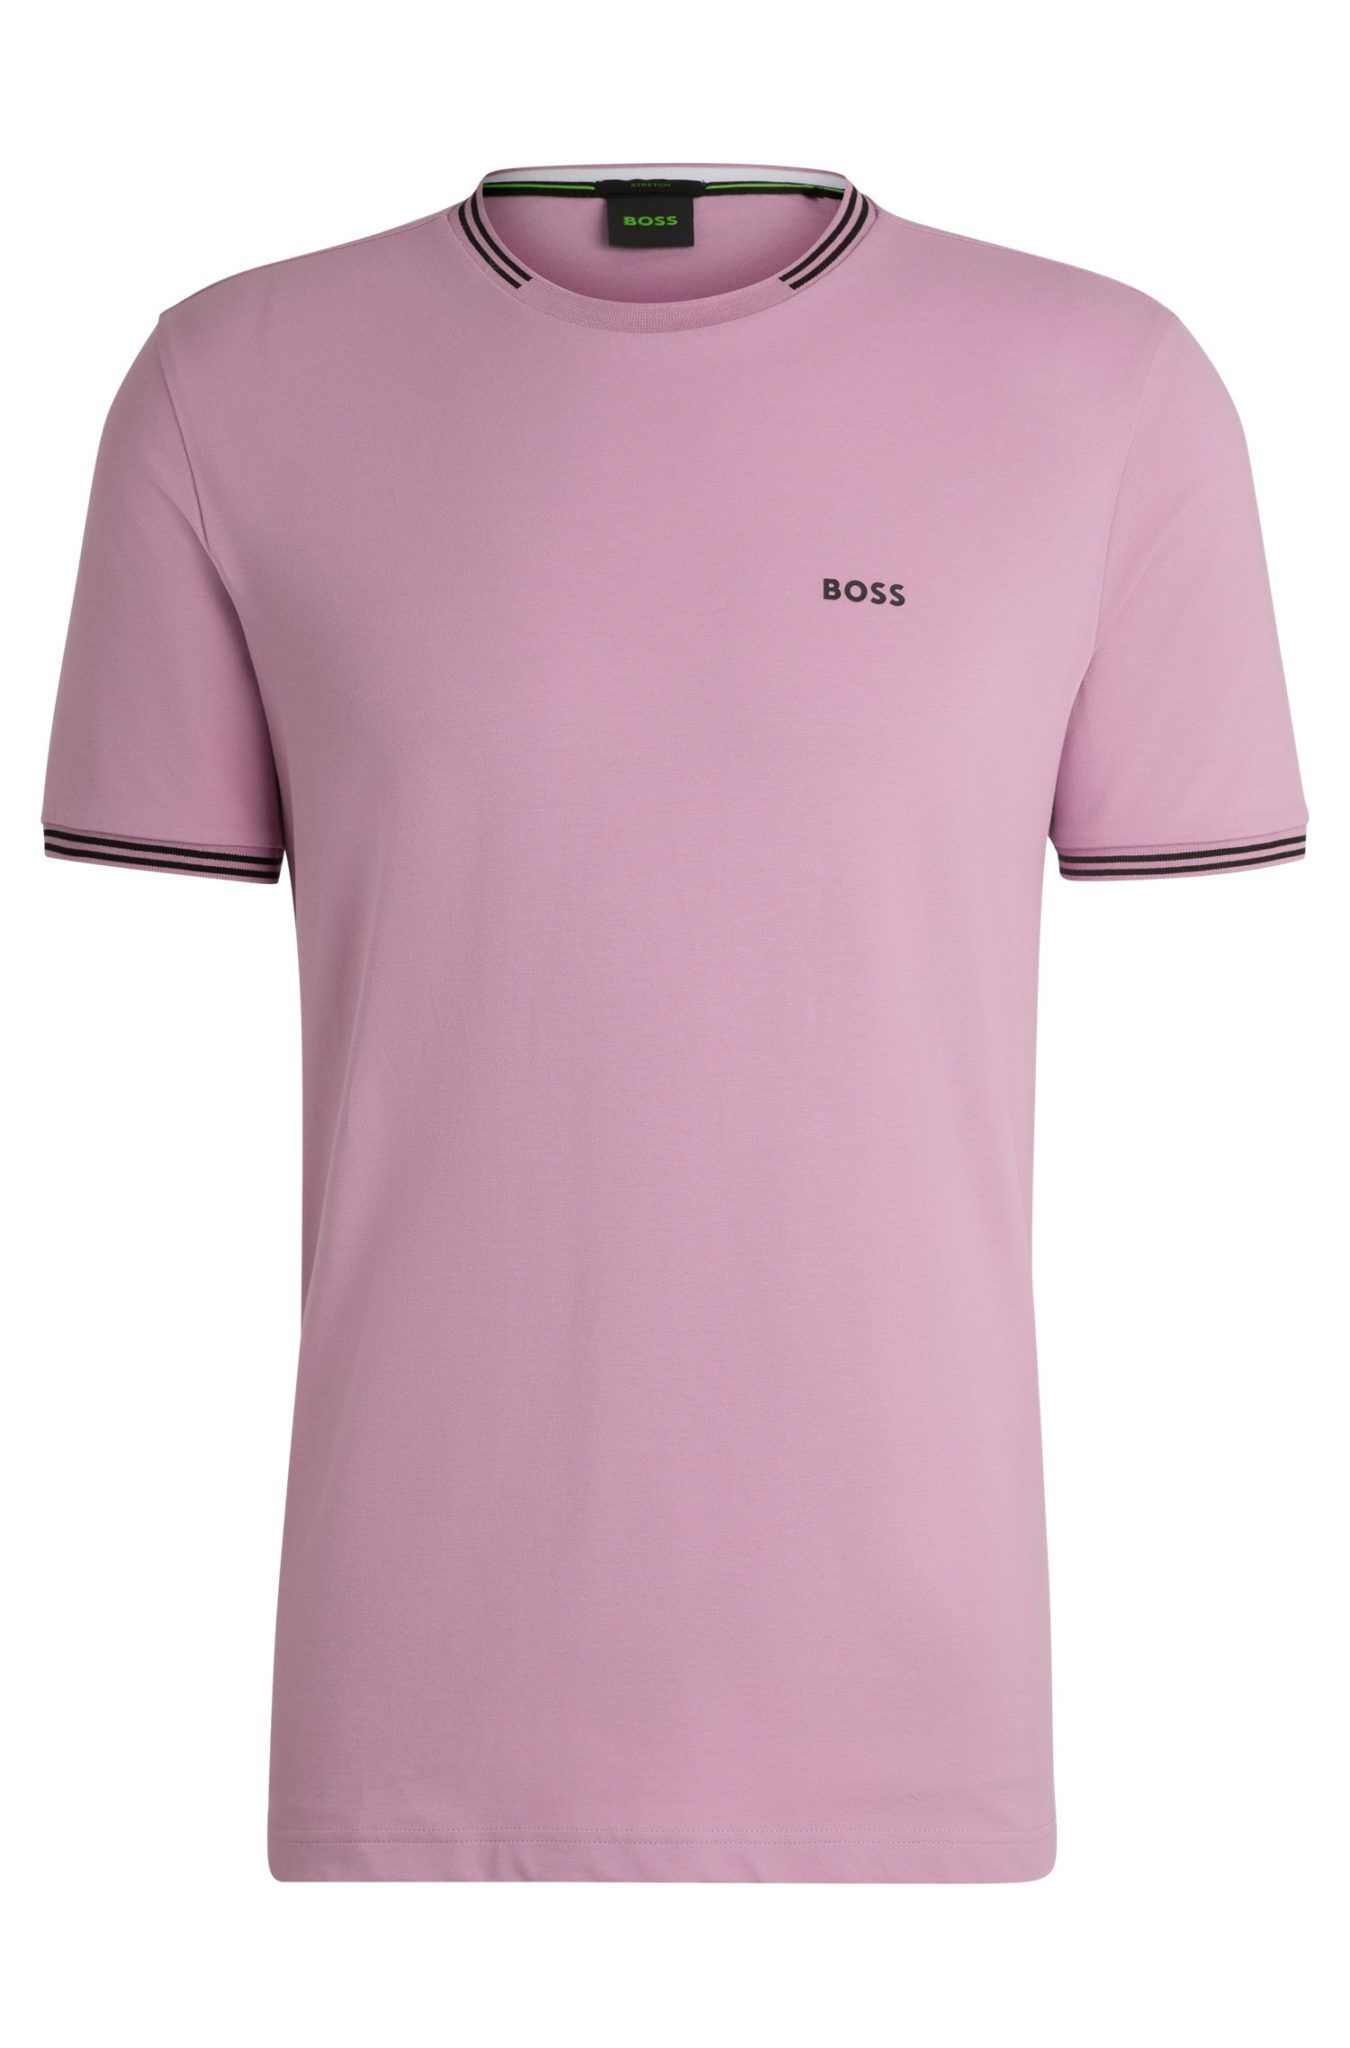 Hugo Boss T-shirt en coton stretch avec rayures et logo